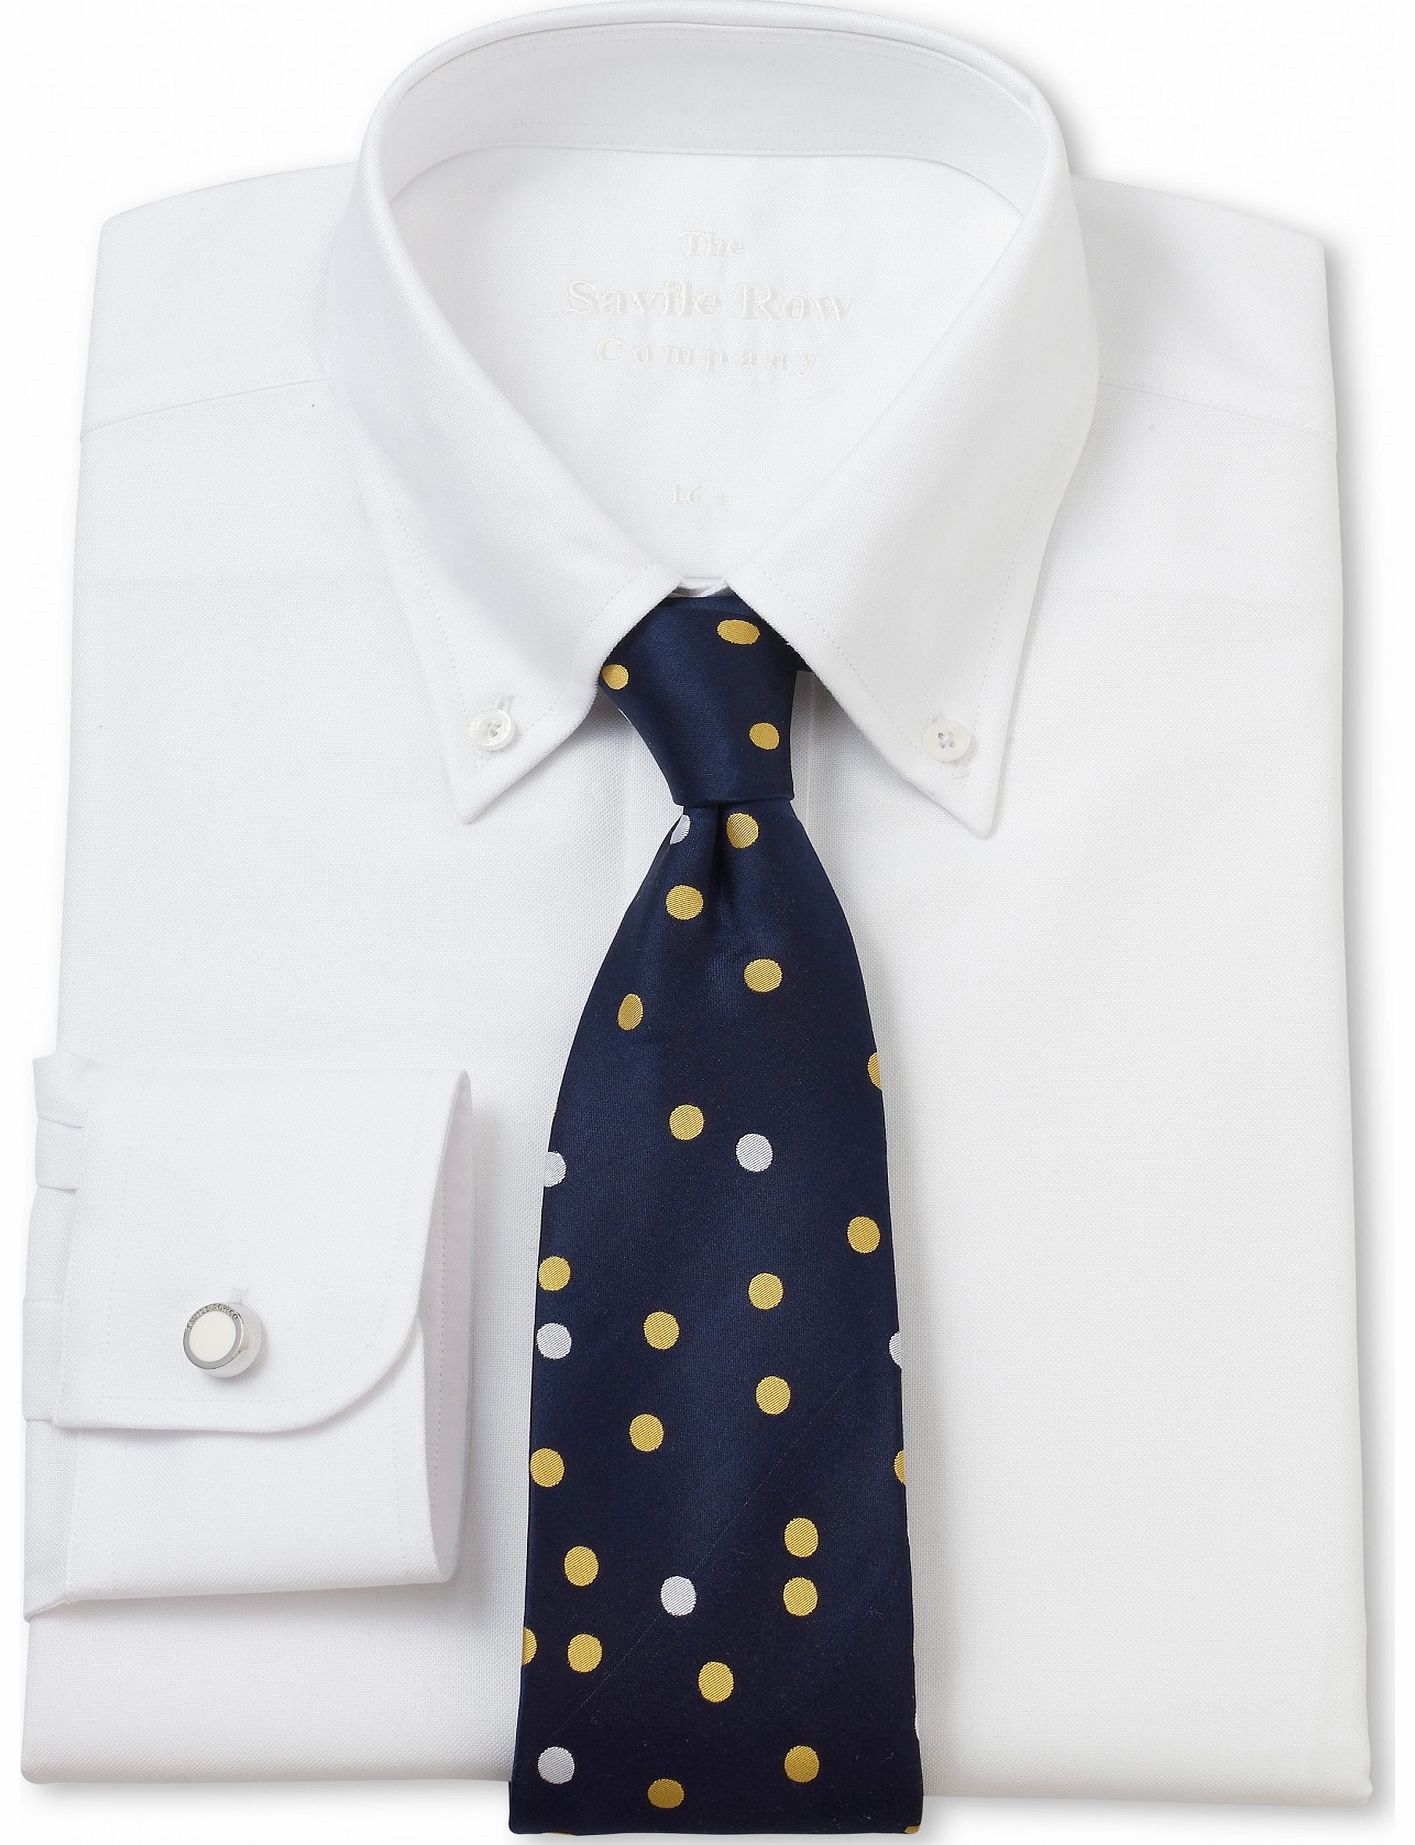 Savile Row Company White Oxford Button Down Slim Fit Shirt 17``